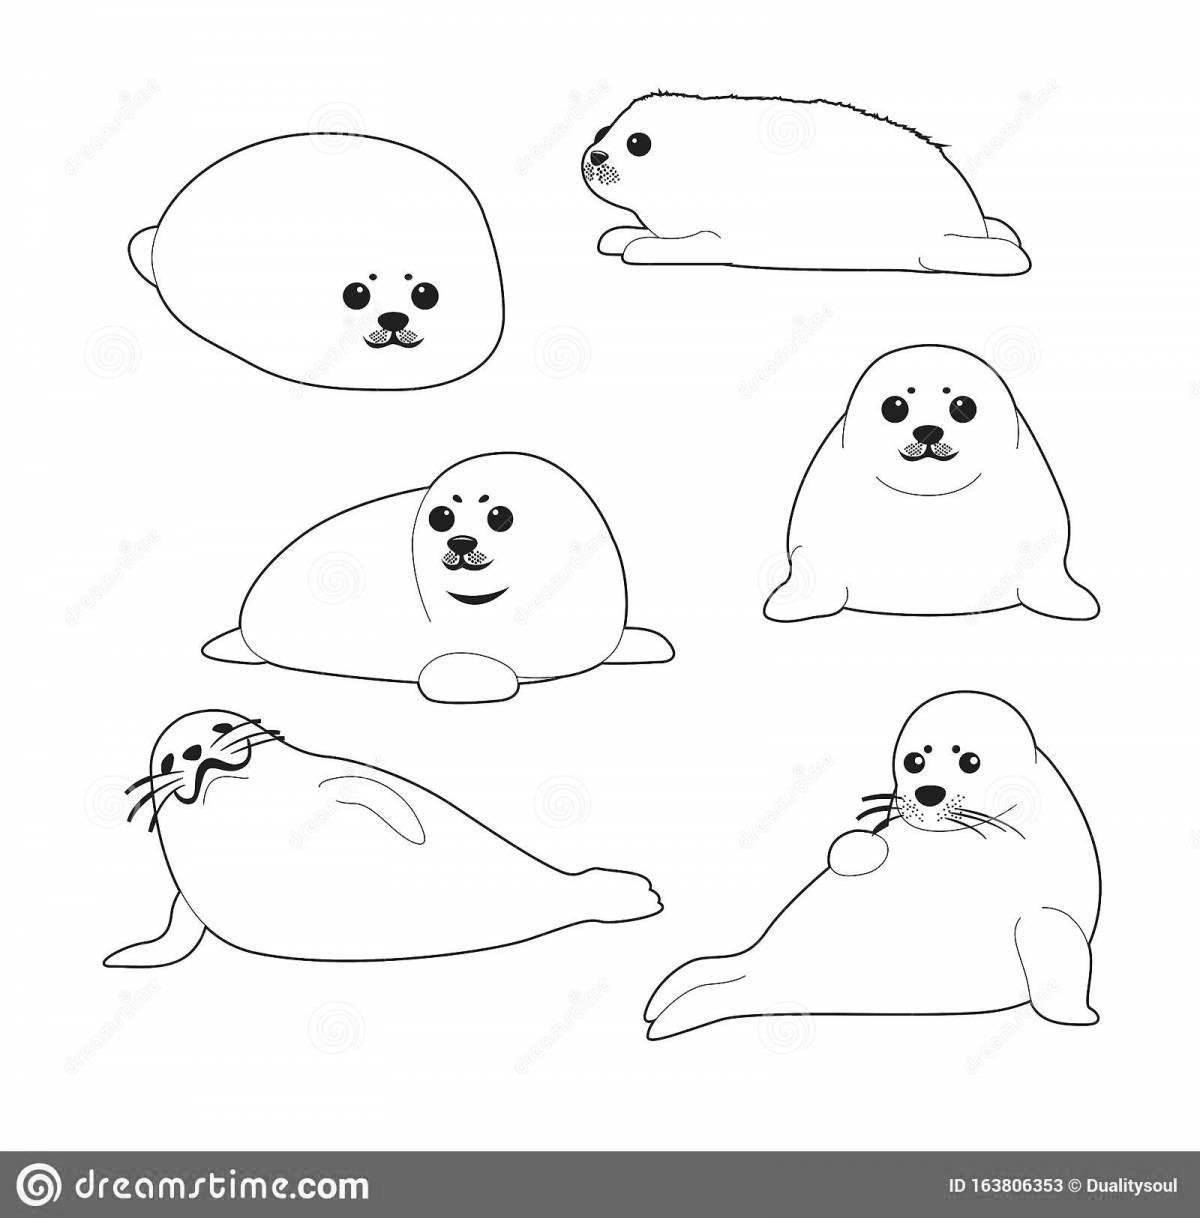 Wonderful harbor seal coloring page